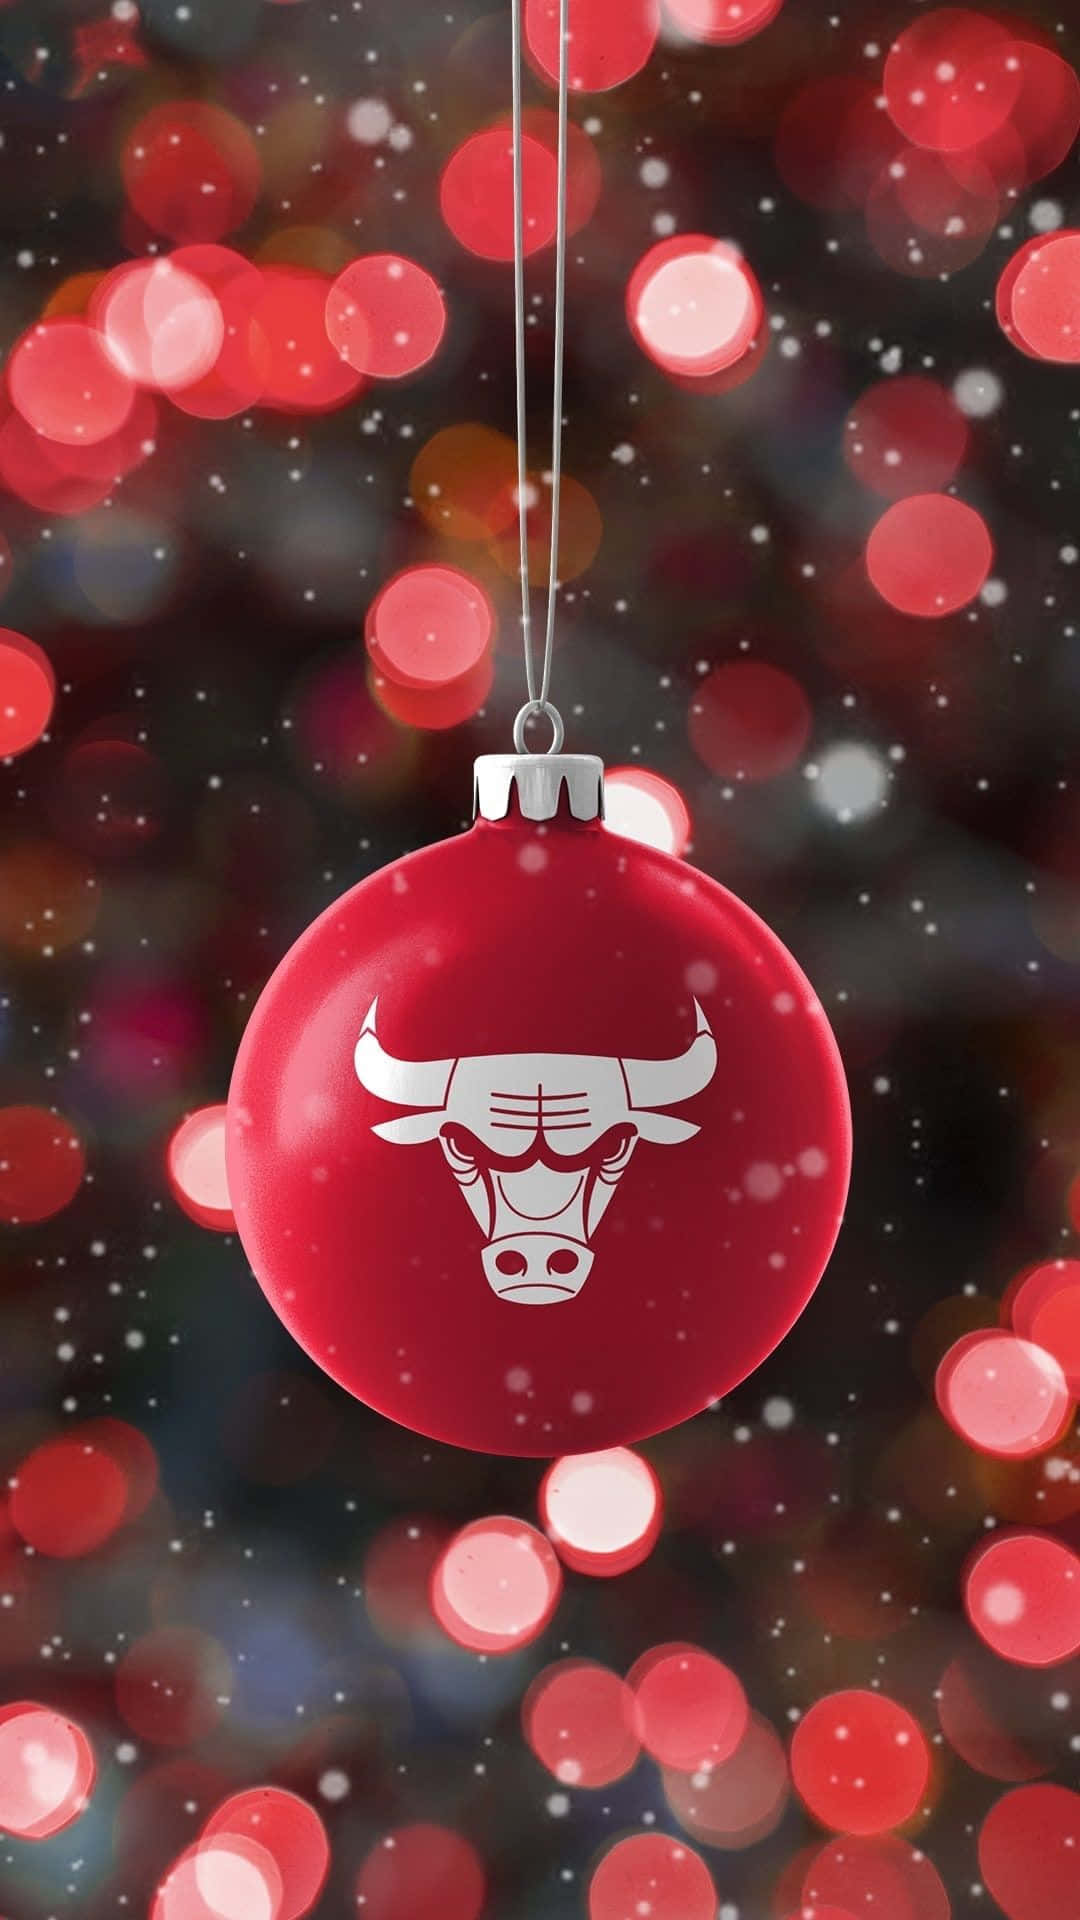 Chicago Bulls Logo On Christmas Ball Phone Wallpaper